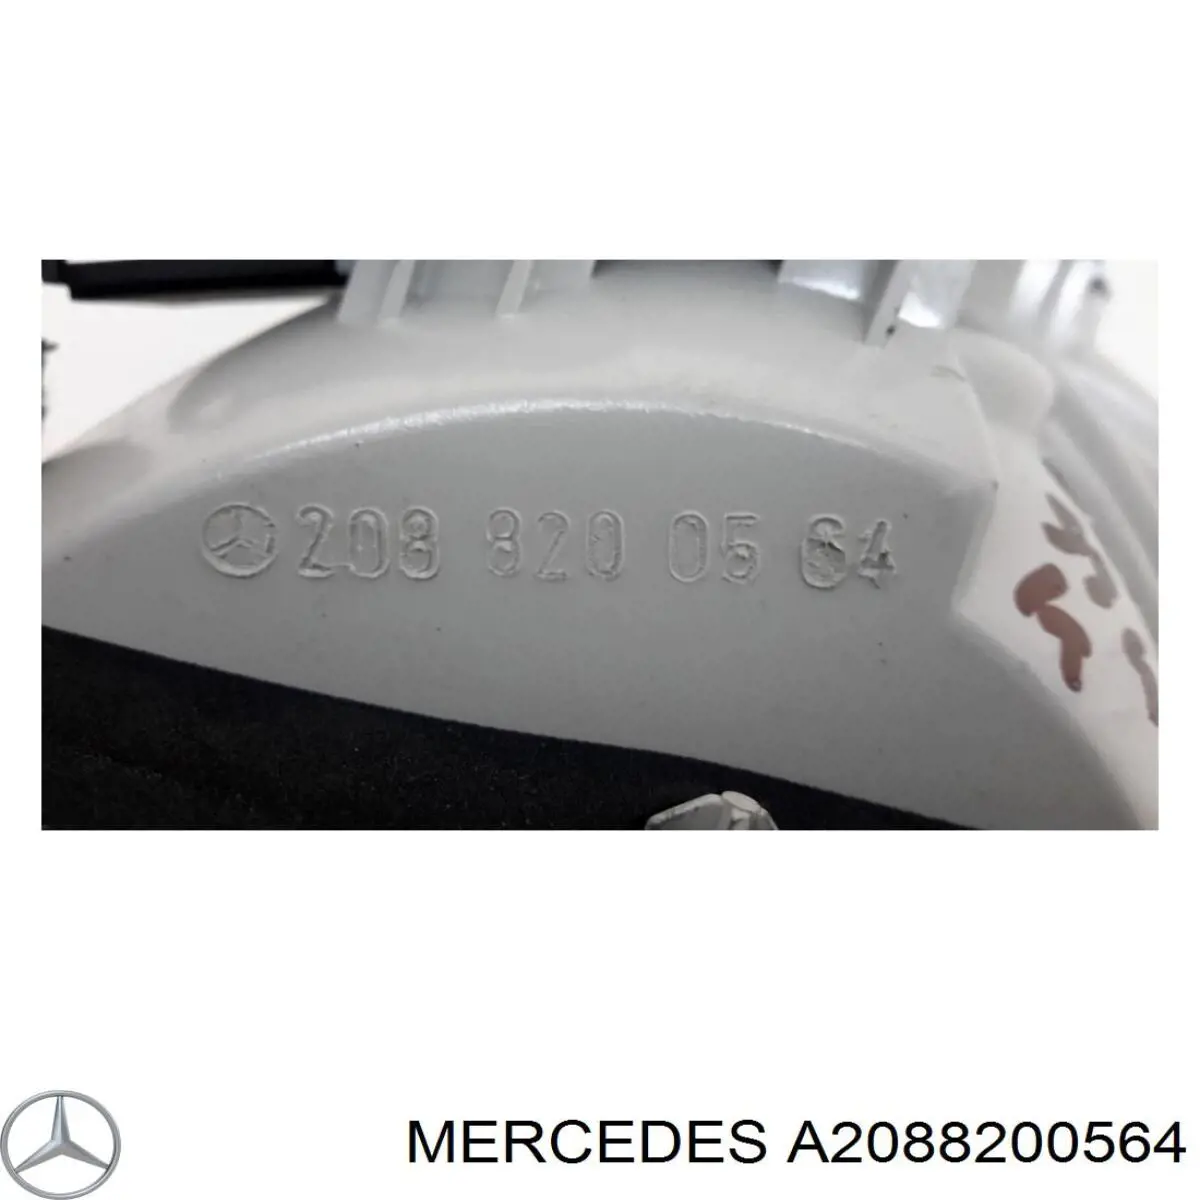 A2088200564 Mercedes piloto trasero interior izquierdo